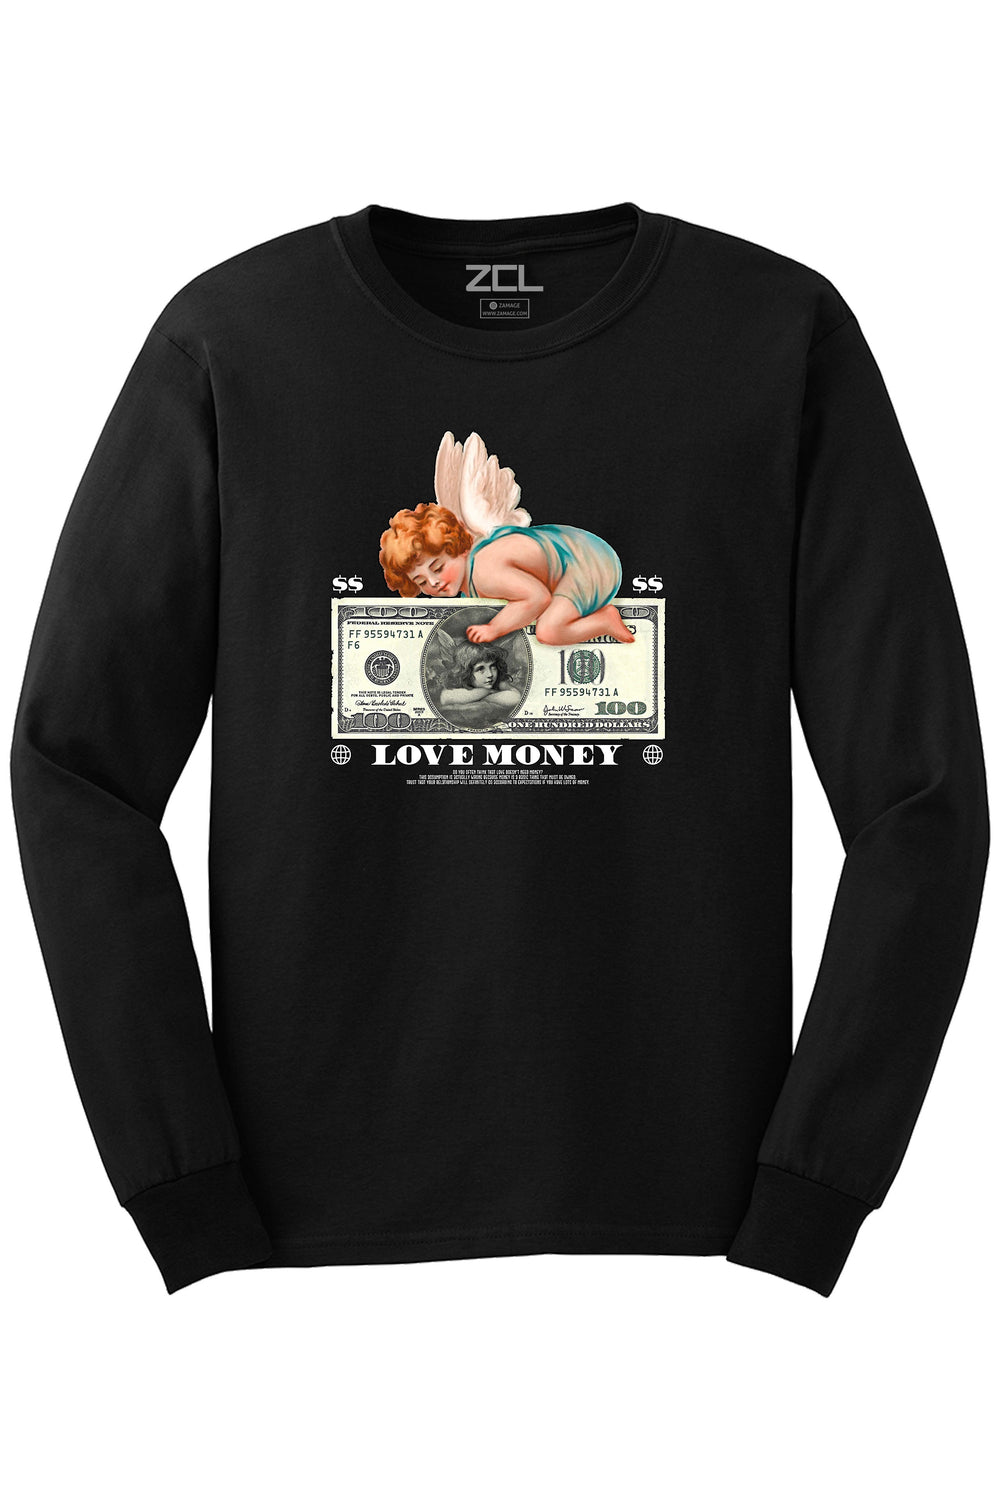 Love Money Long Sleeve Tee (Multi Color Logo) - Zamage